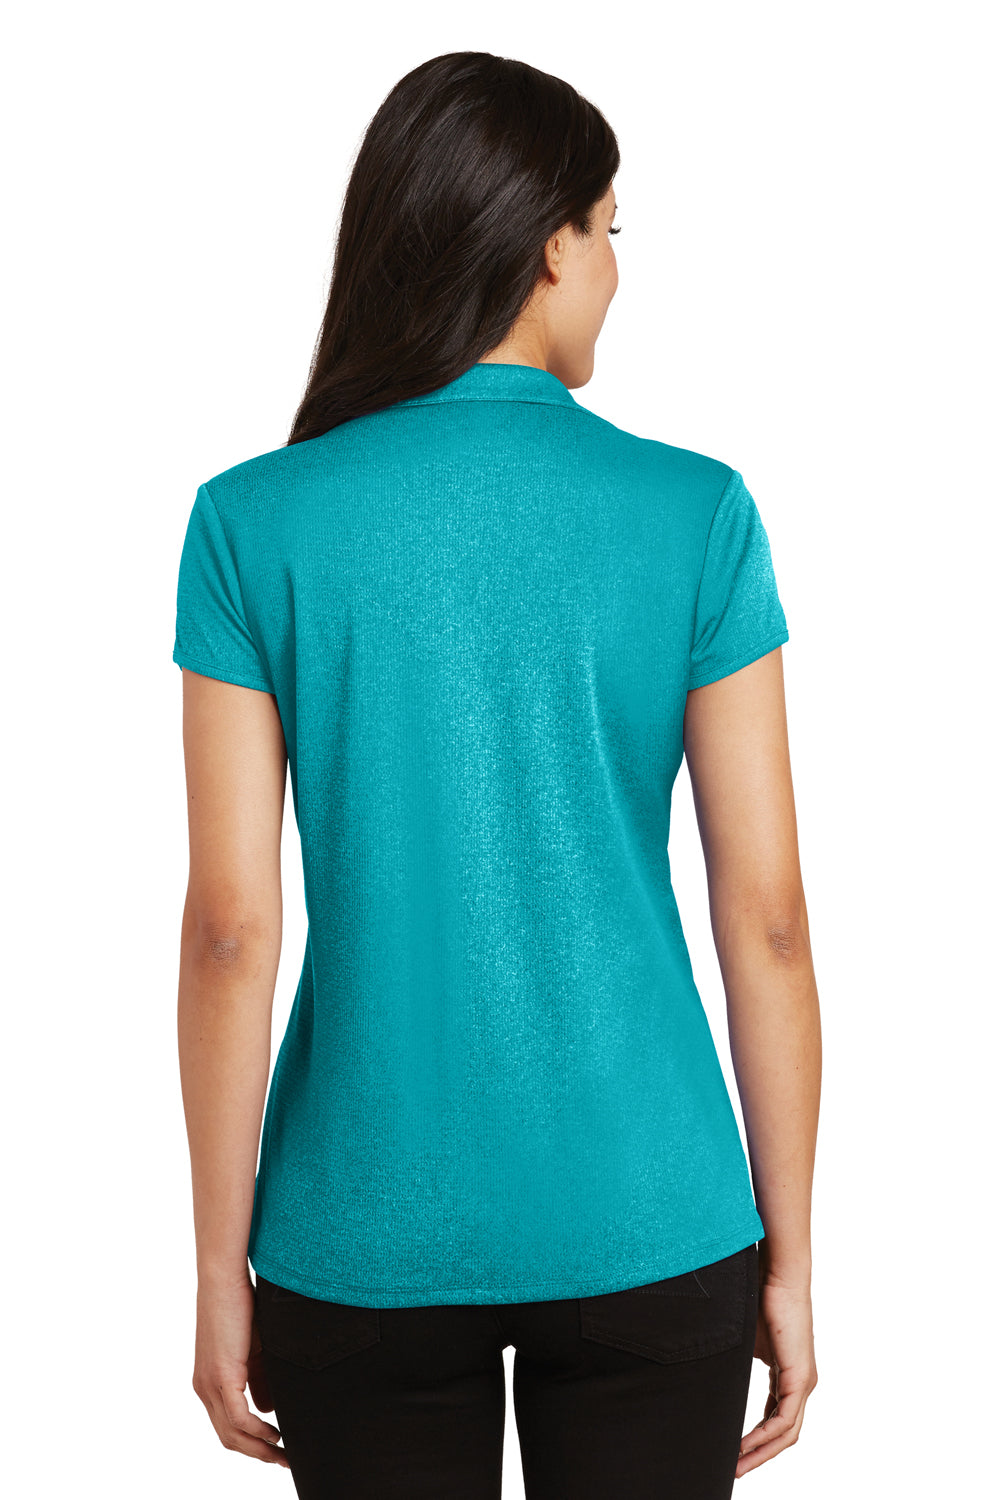 Port Authority L576 Womens Trace Moisture Wicking Short Sleeve Polo Shirt Heather Tropic Blue Back